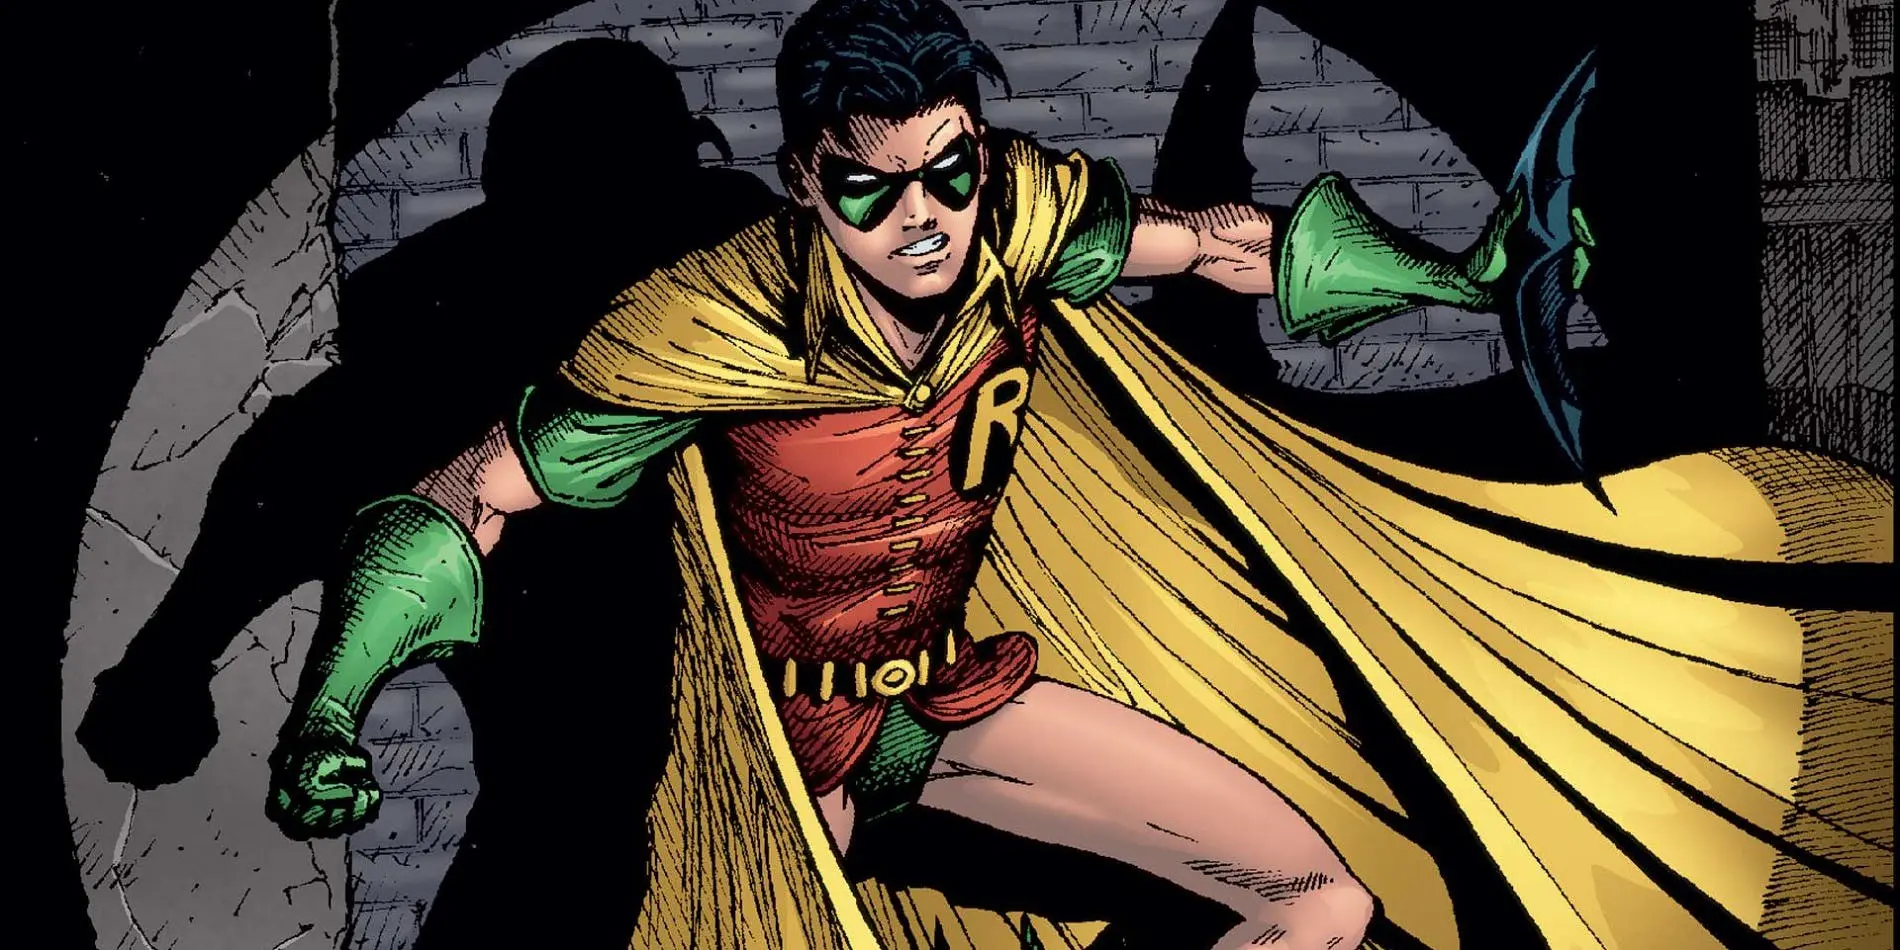 Dick-Grayson-as-Robin-from-DC-Comics-2.jpg.webp